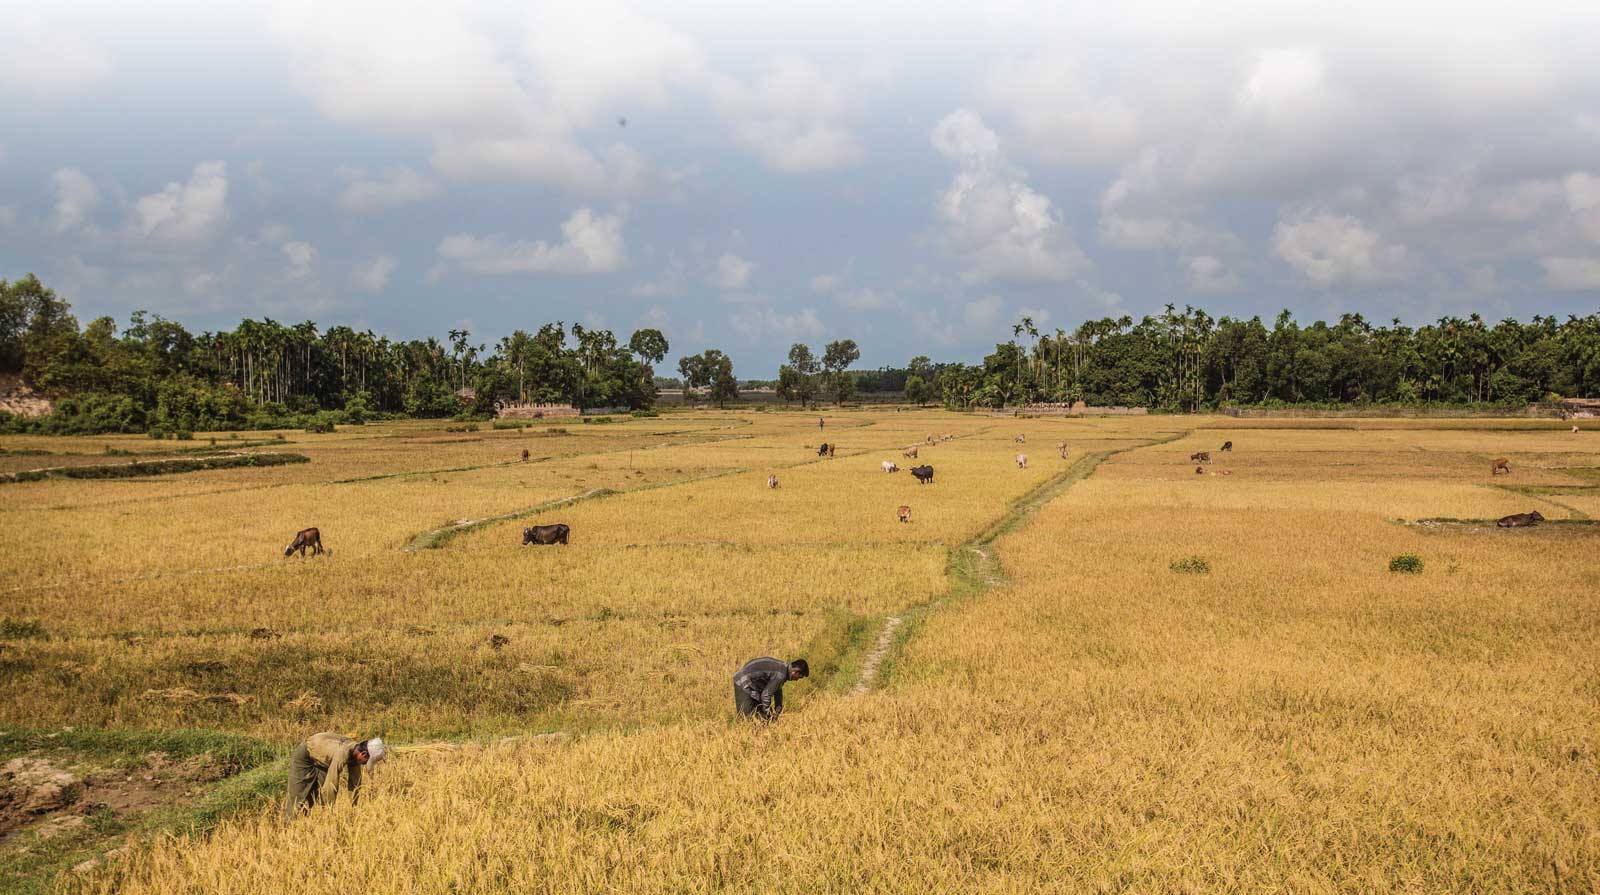 Maungdaw, Myanmar - Farm laborers and livestock in a paddy field. Image: FAO / Hkun La